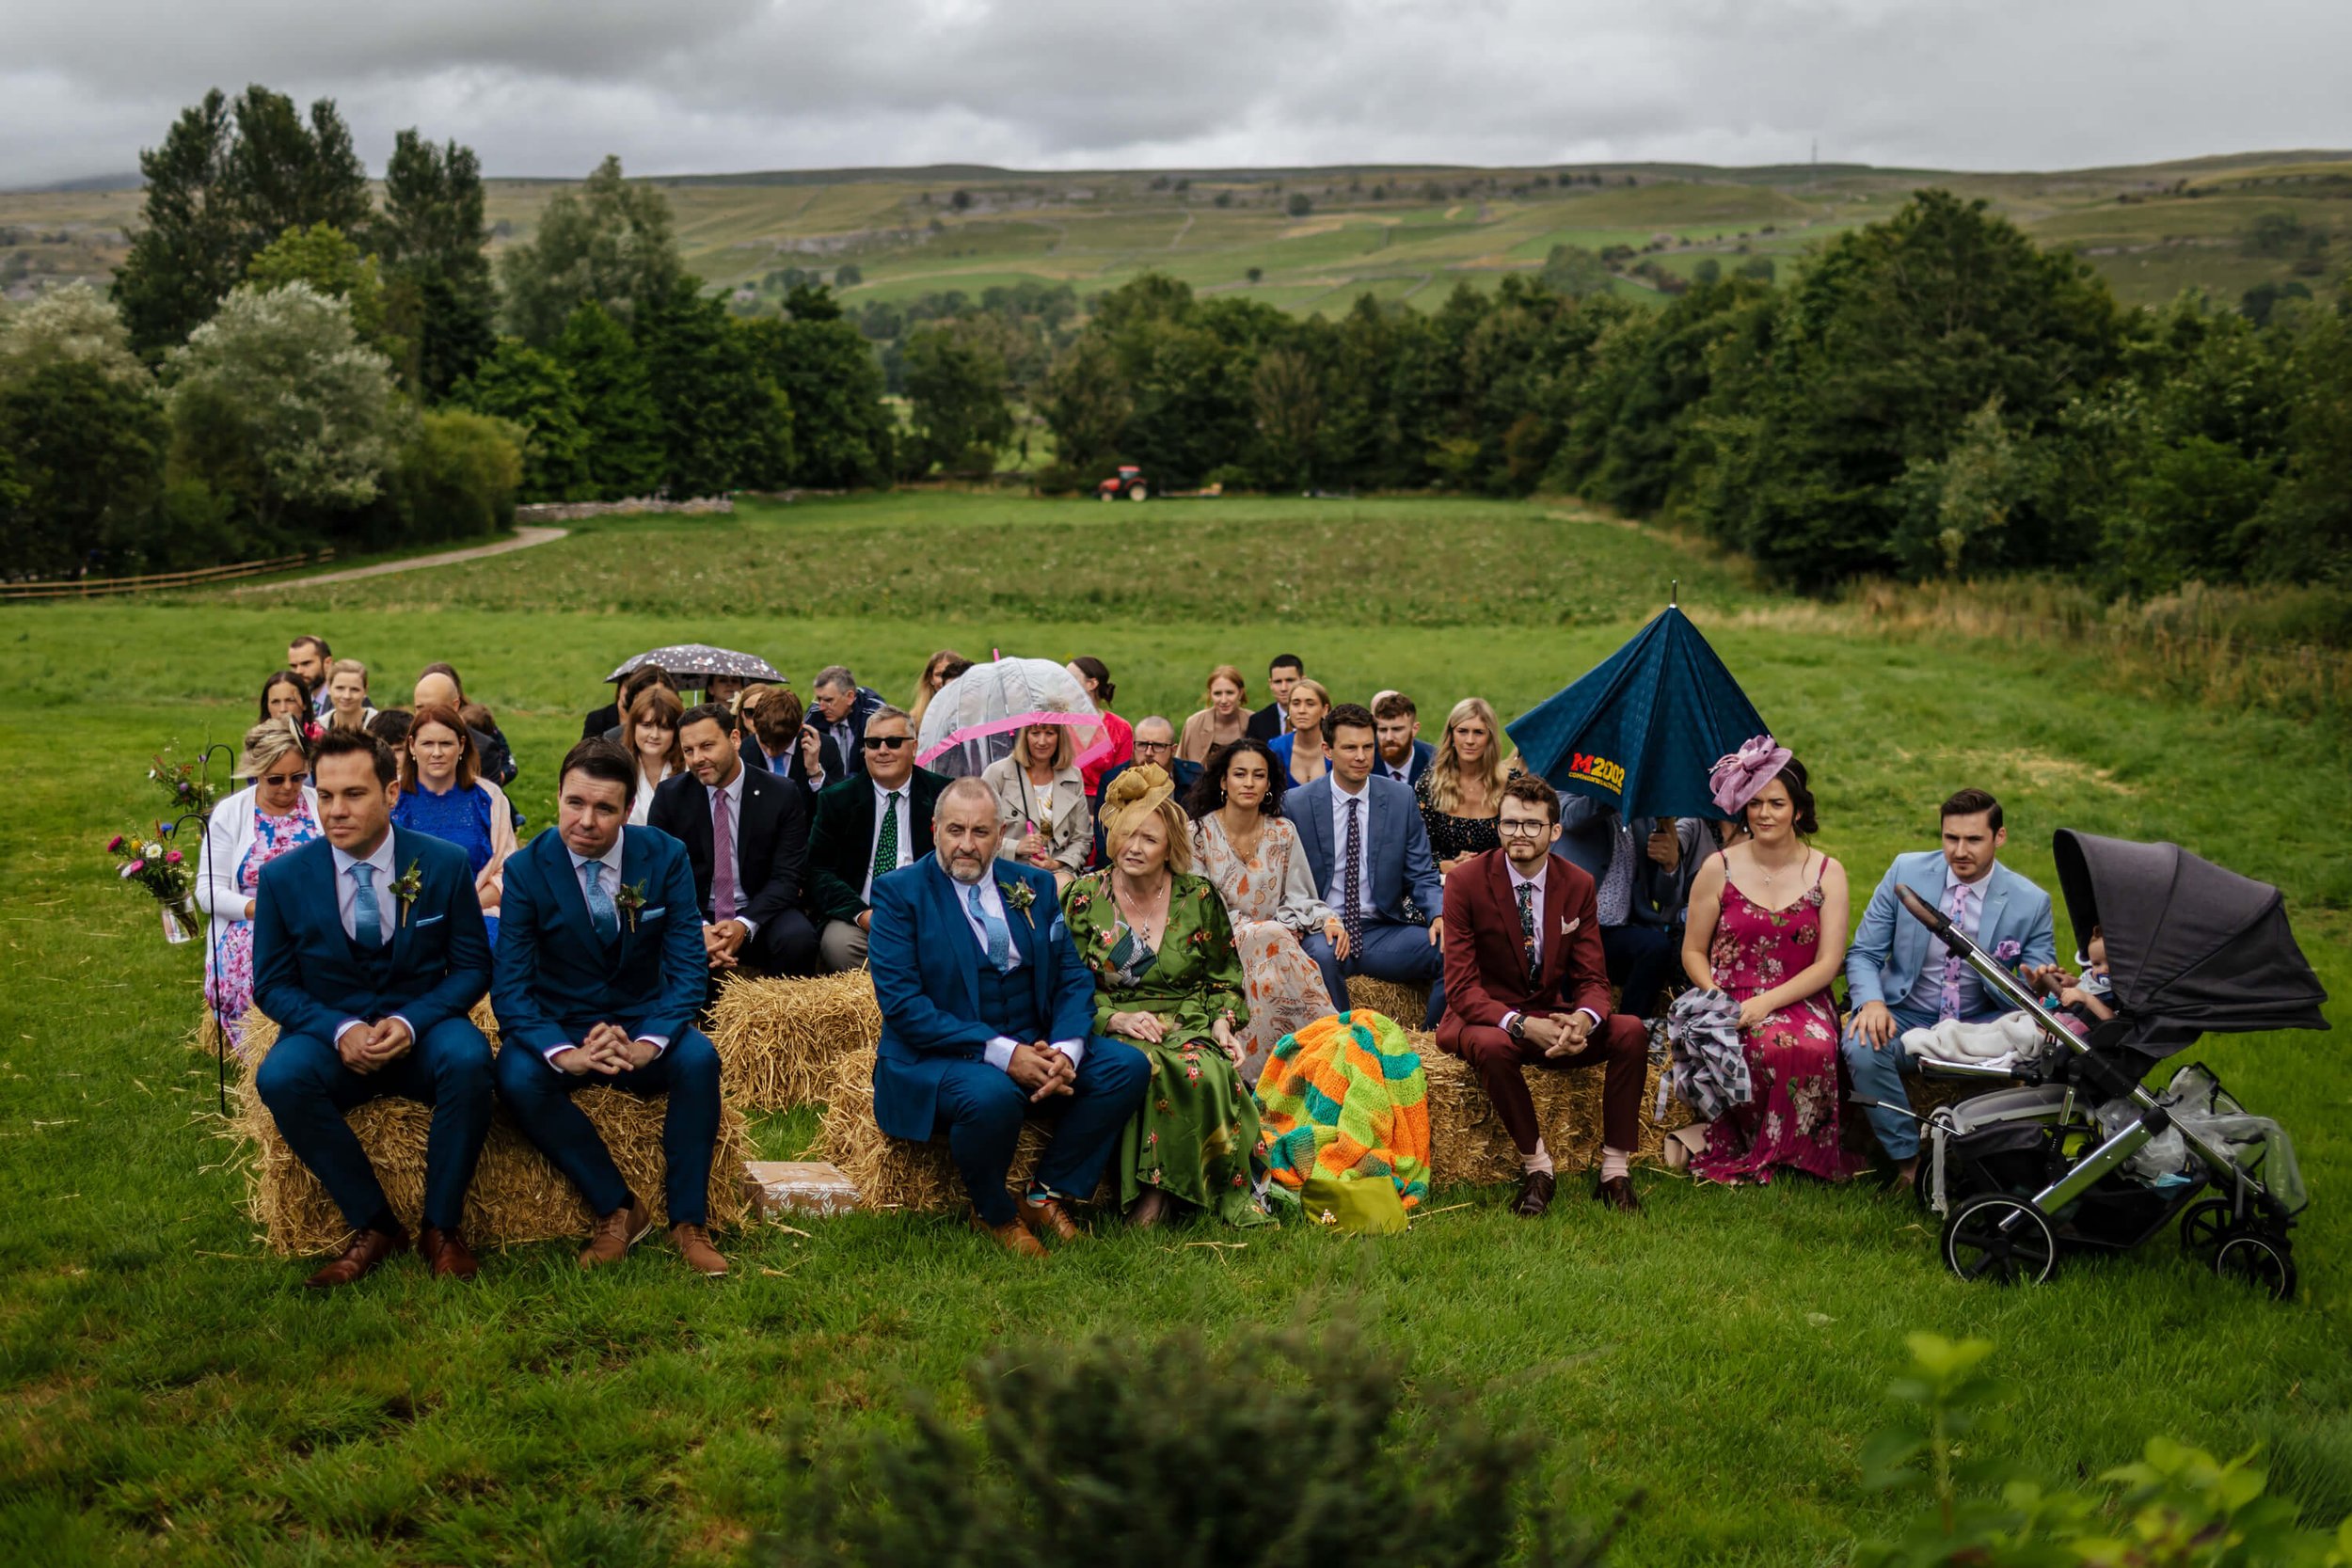 Kilnsey park wedding guests